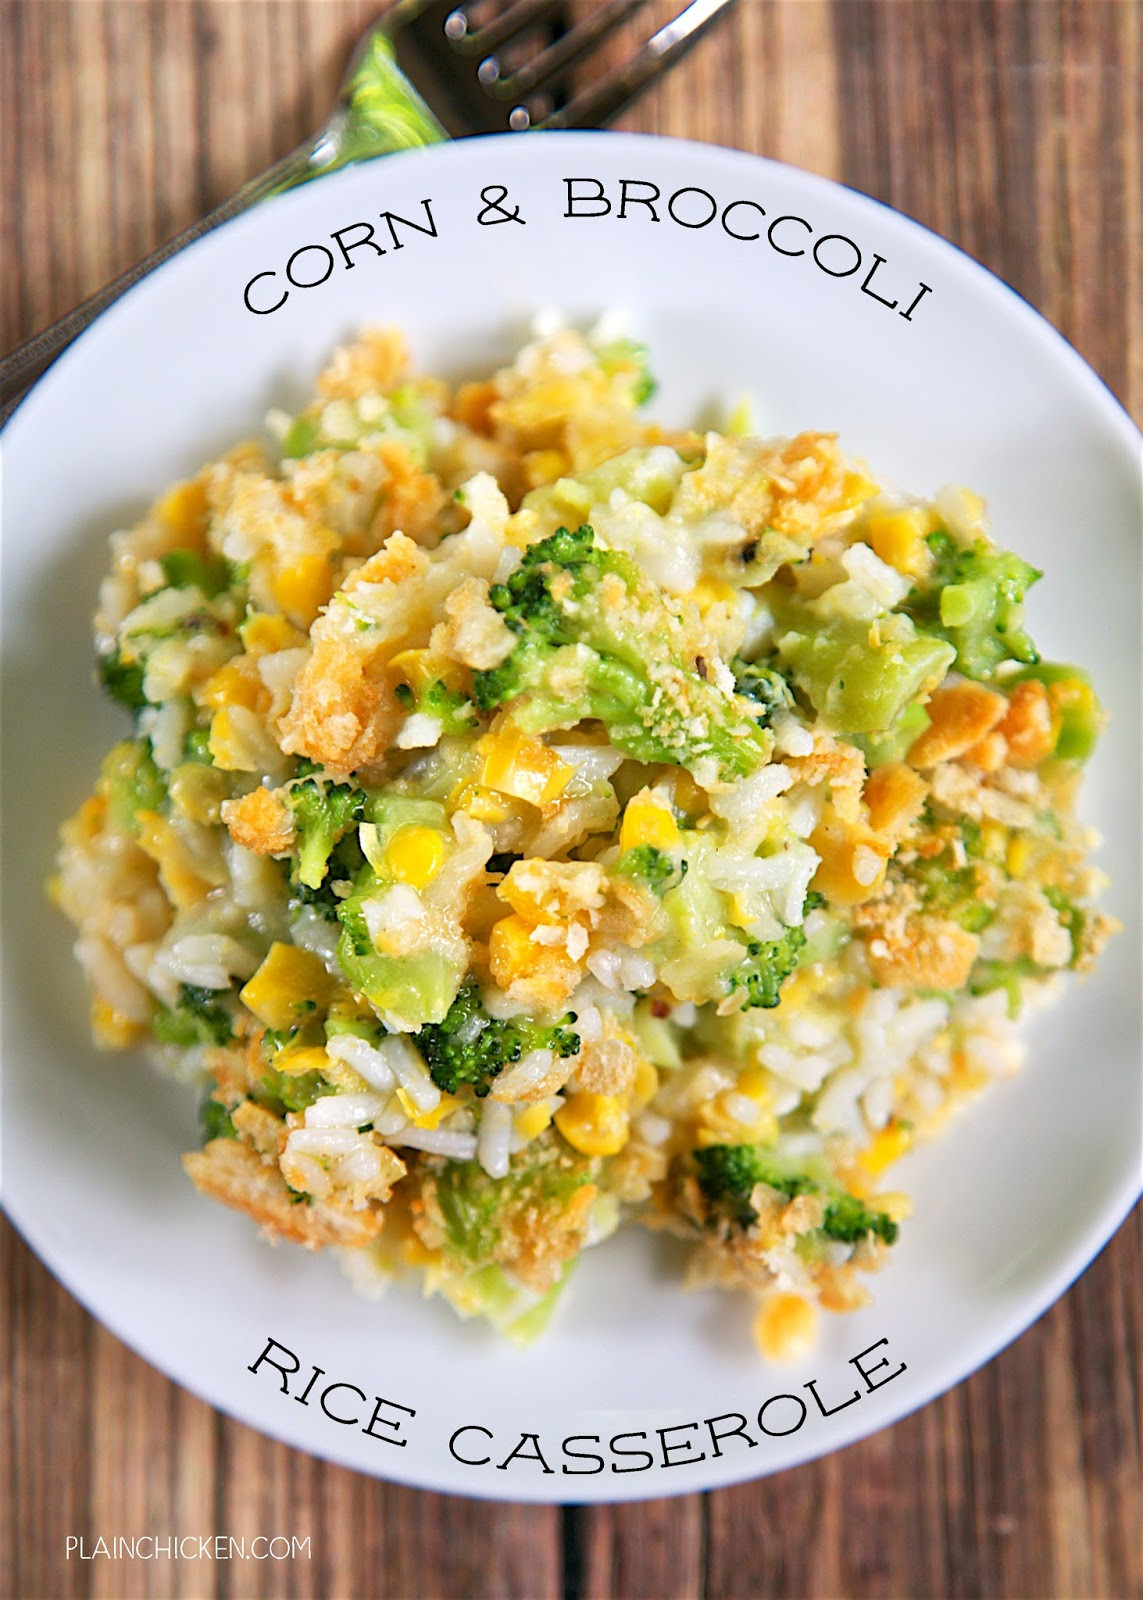 Corn And Rice Casserole
 Corn and Broccoli Rice Casserole